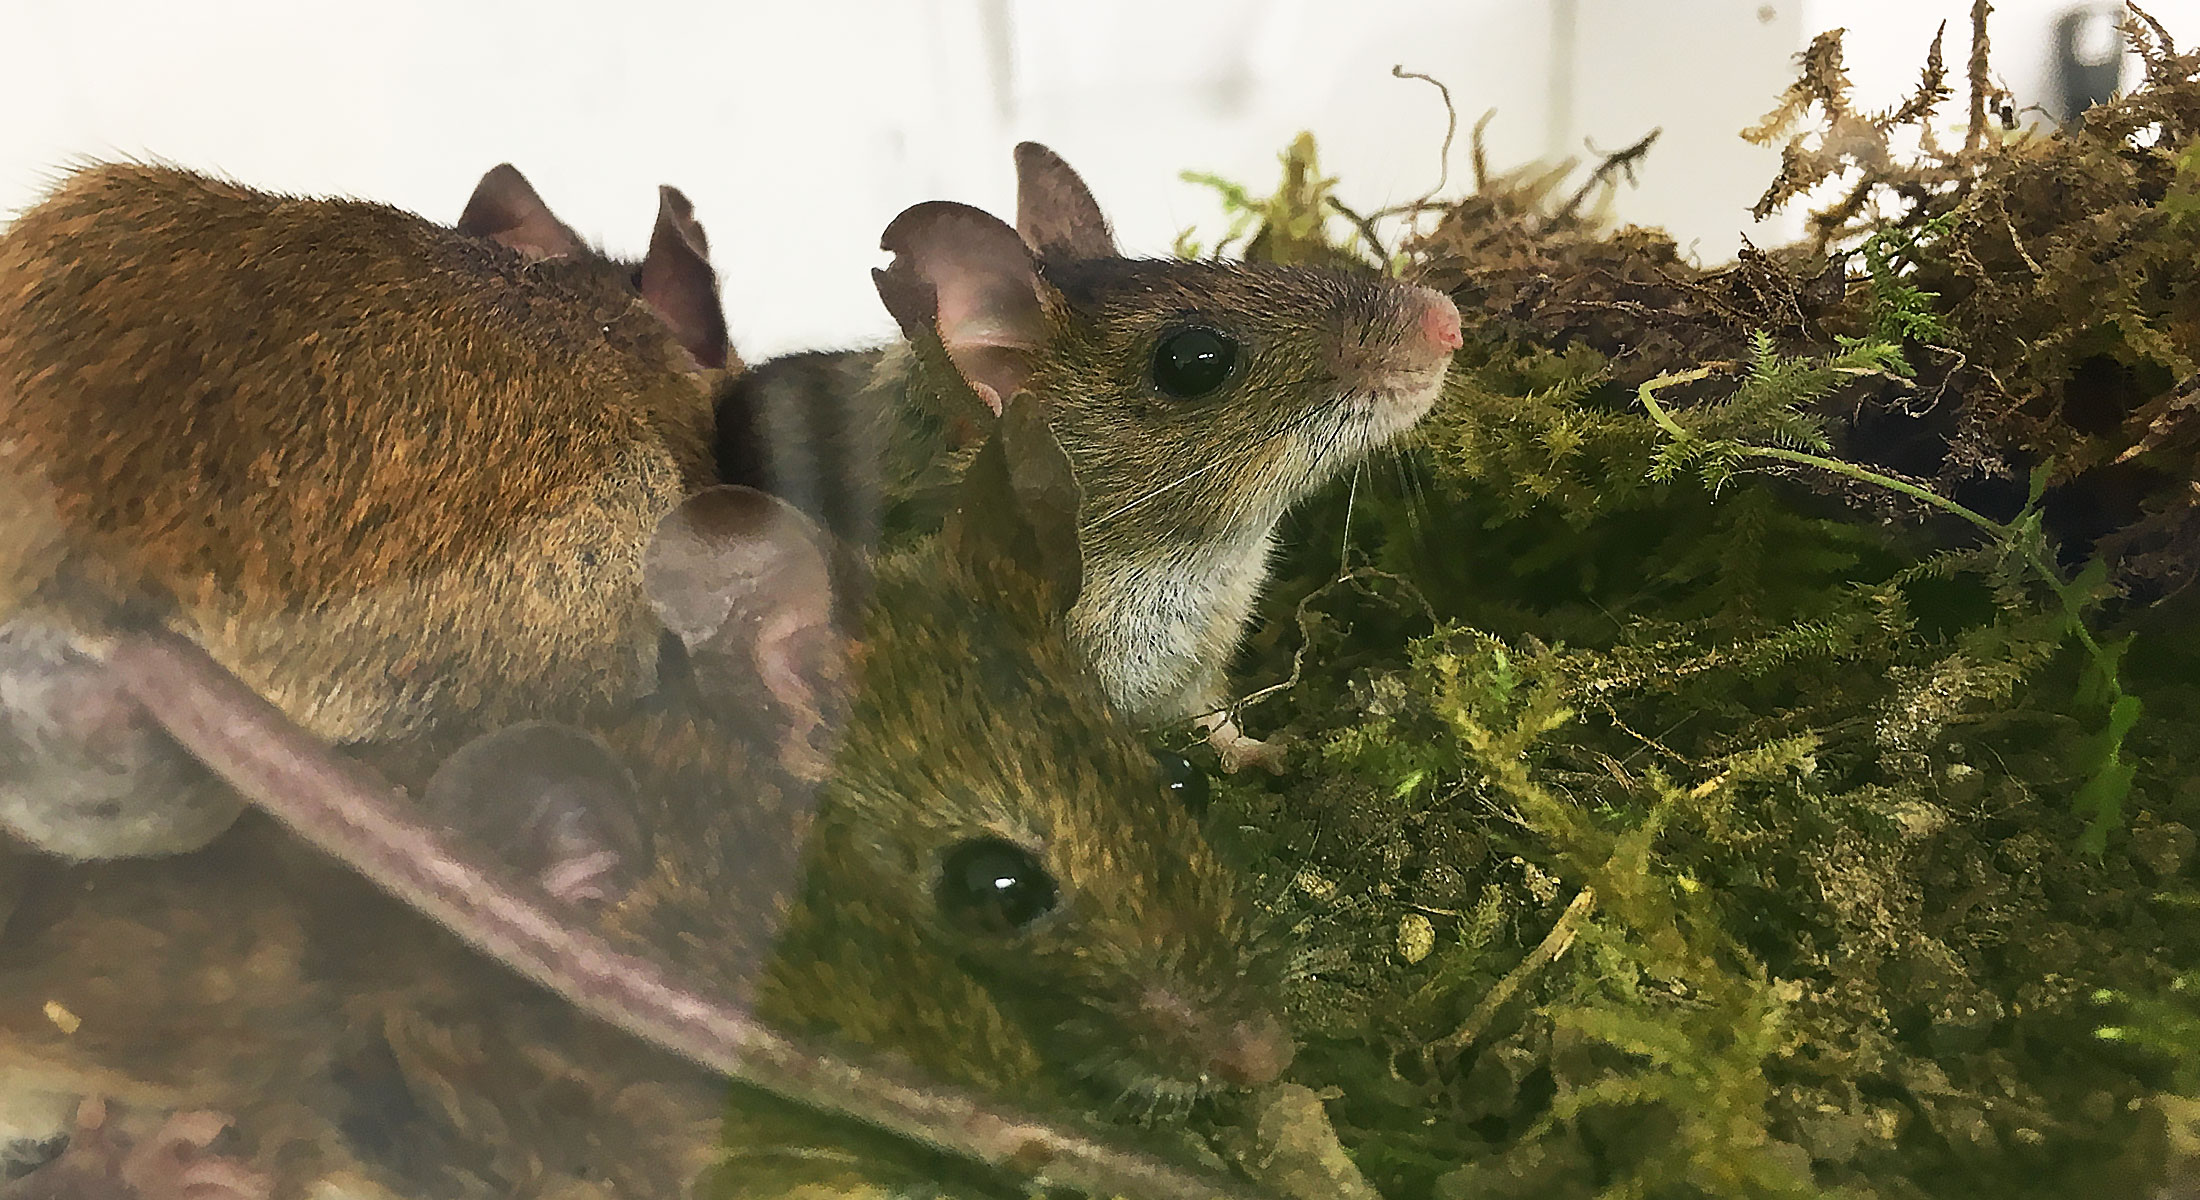 Wild wood mice in captivity experiment